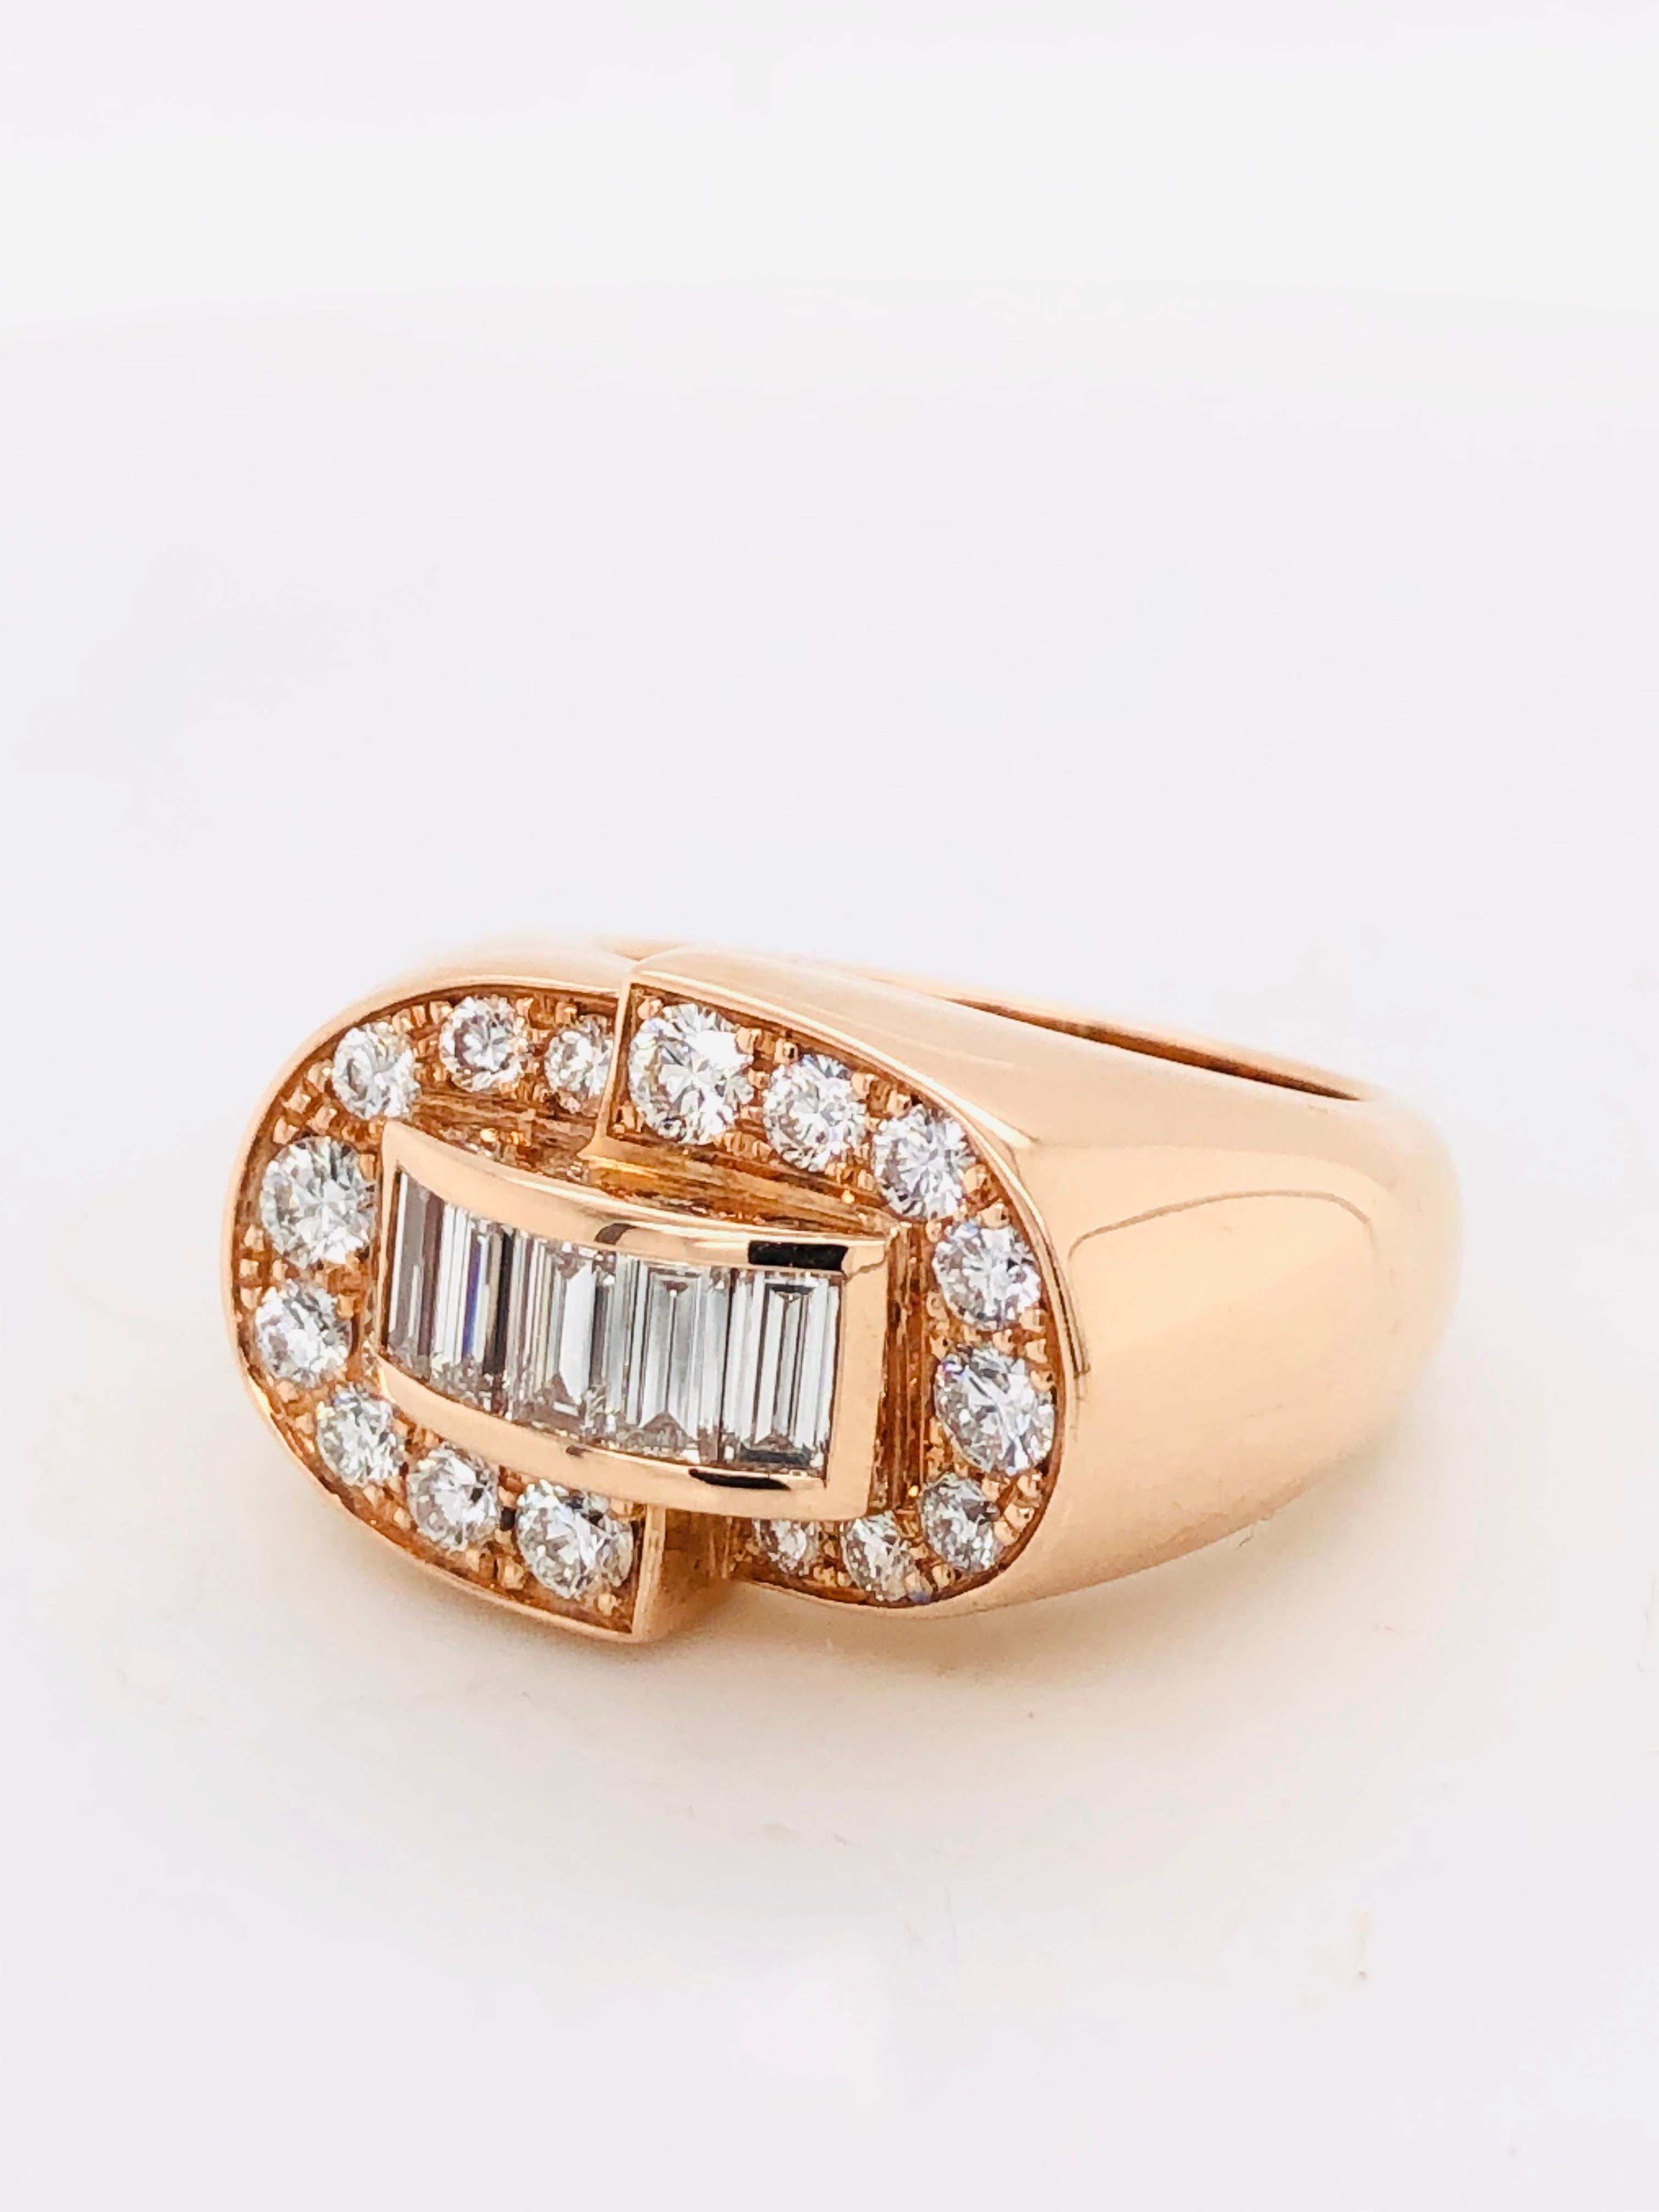 White Diamonds Baguette Cut and Brilliant Cut on Rose Gold 18 Karat Fashion Ring 2